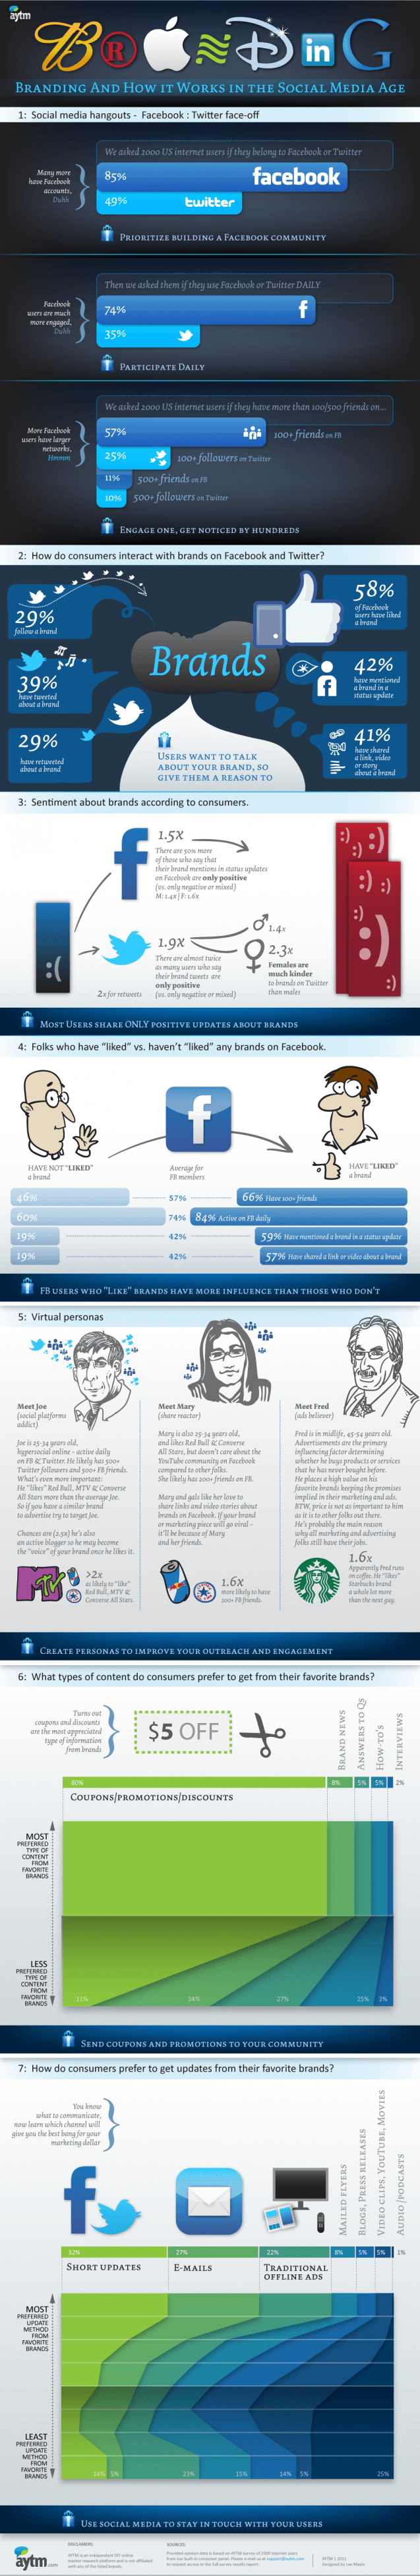 Branding in Social Media [Infographic]